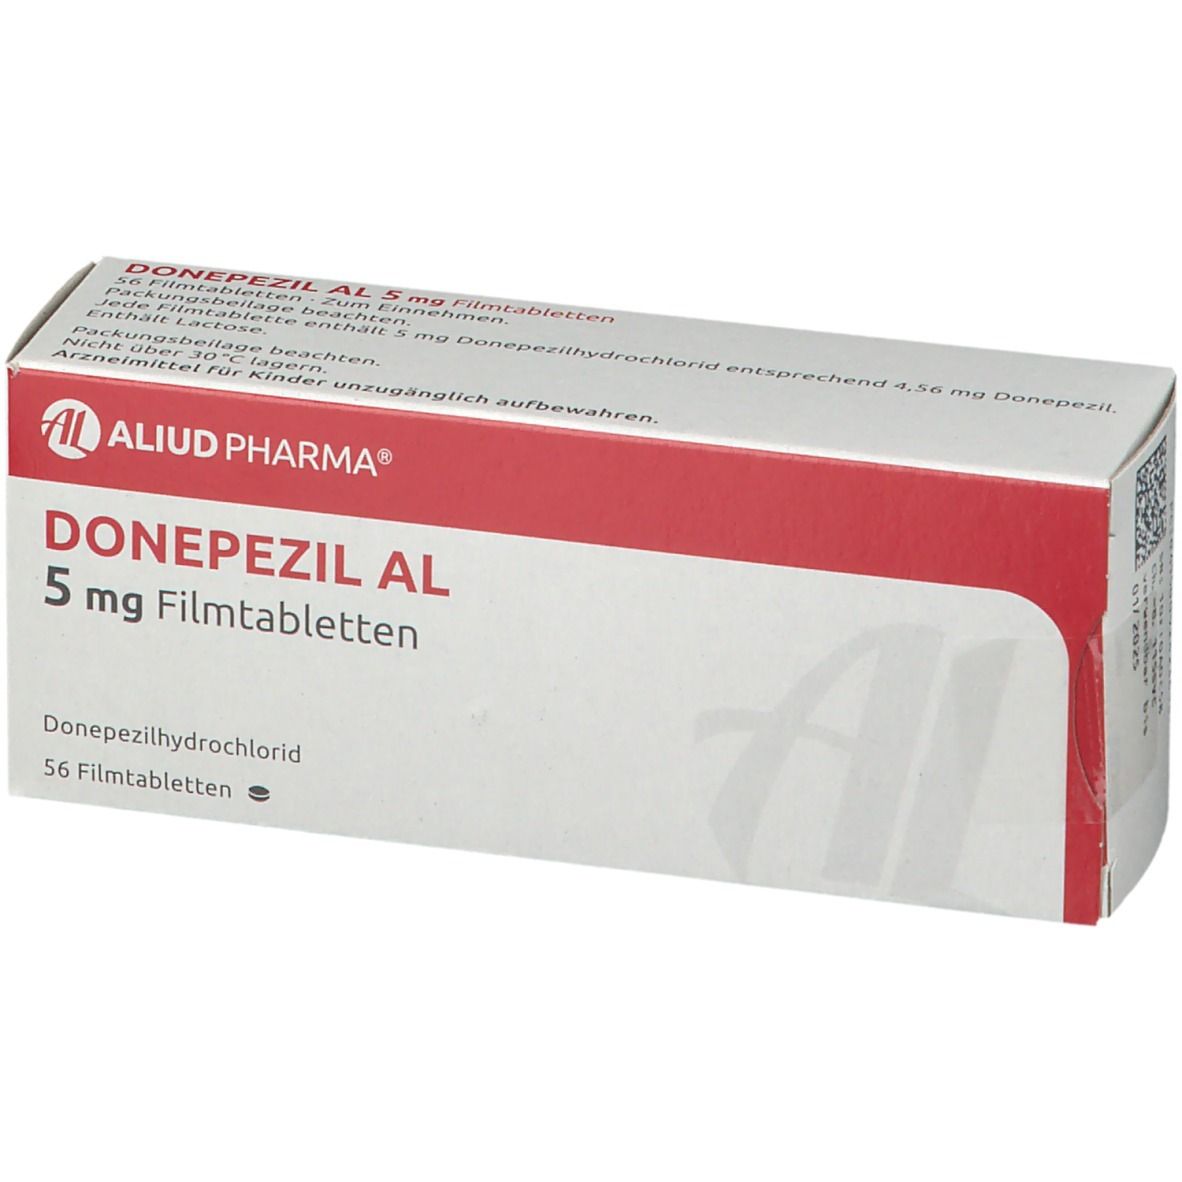 Donepezil AL 5 mg